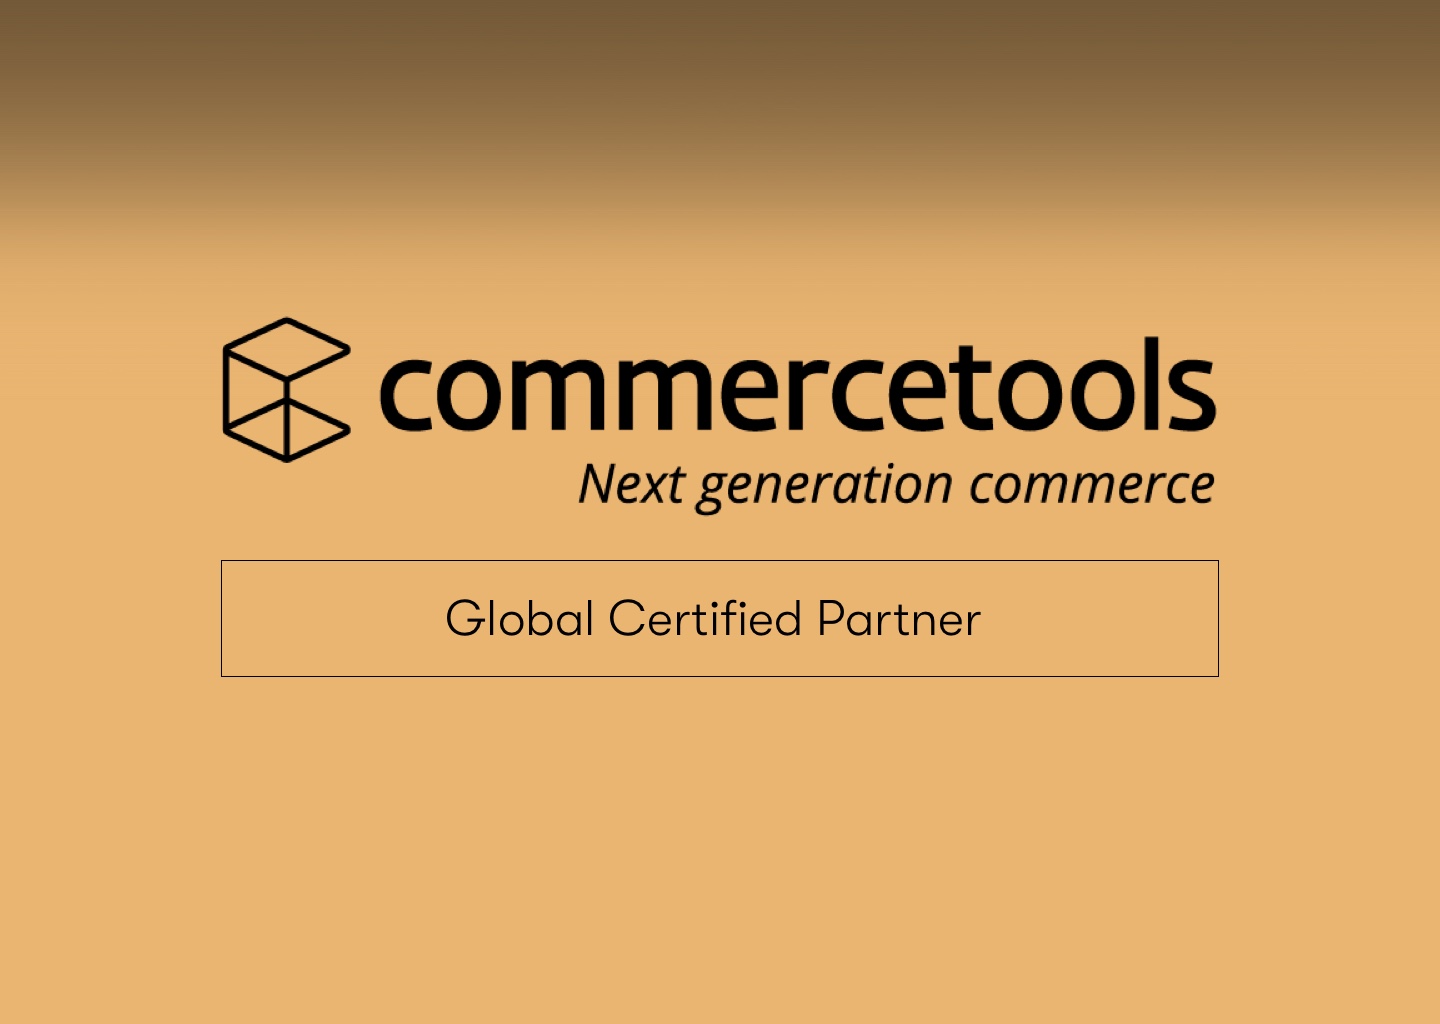 Photon’s global partnership with commercetools